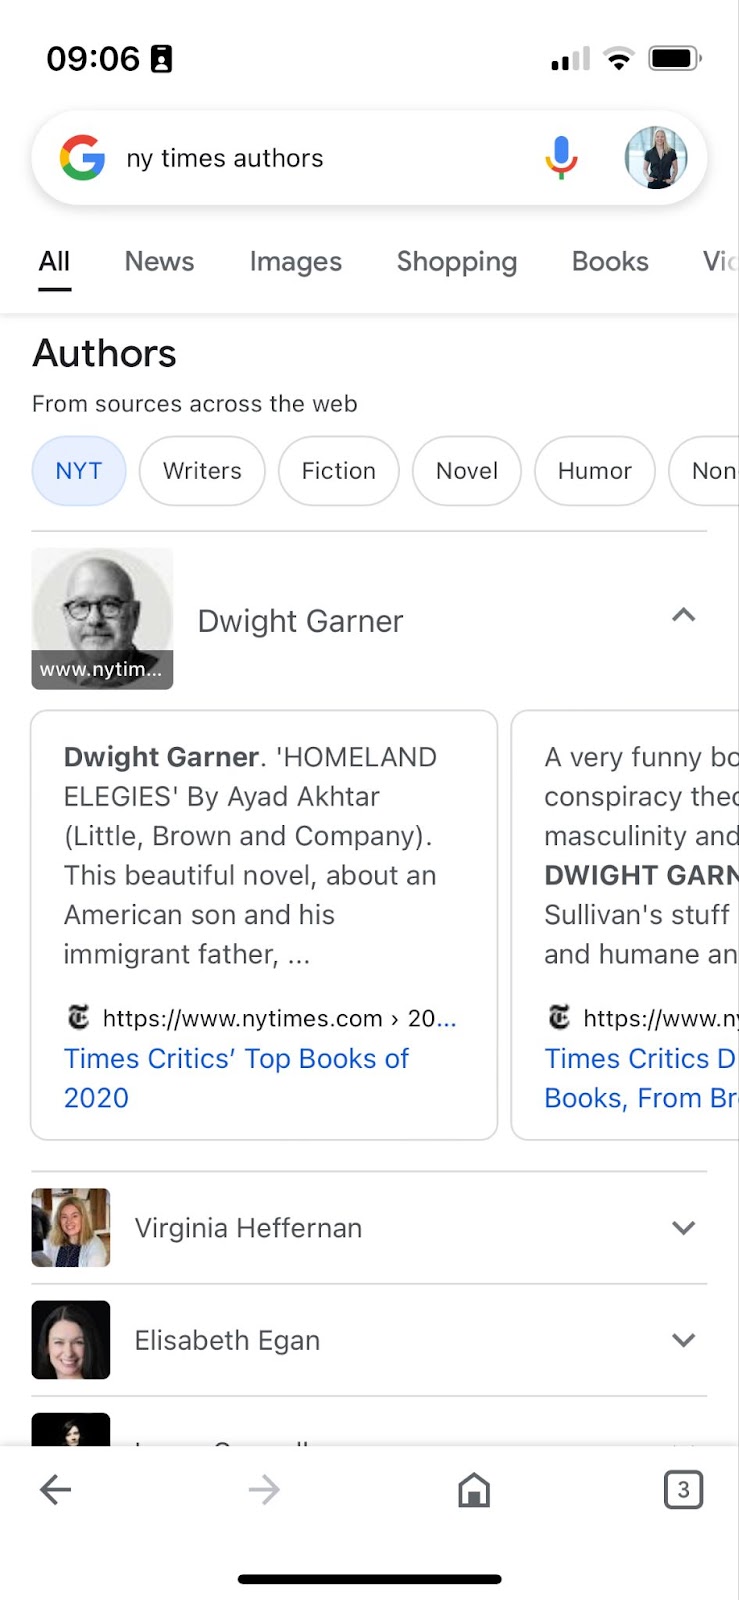 Screenshot Google-Suche nach "ny times authors" vom 10.10.2022